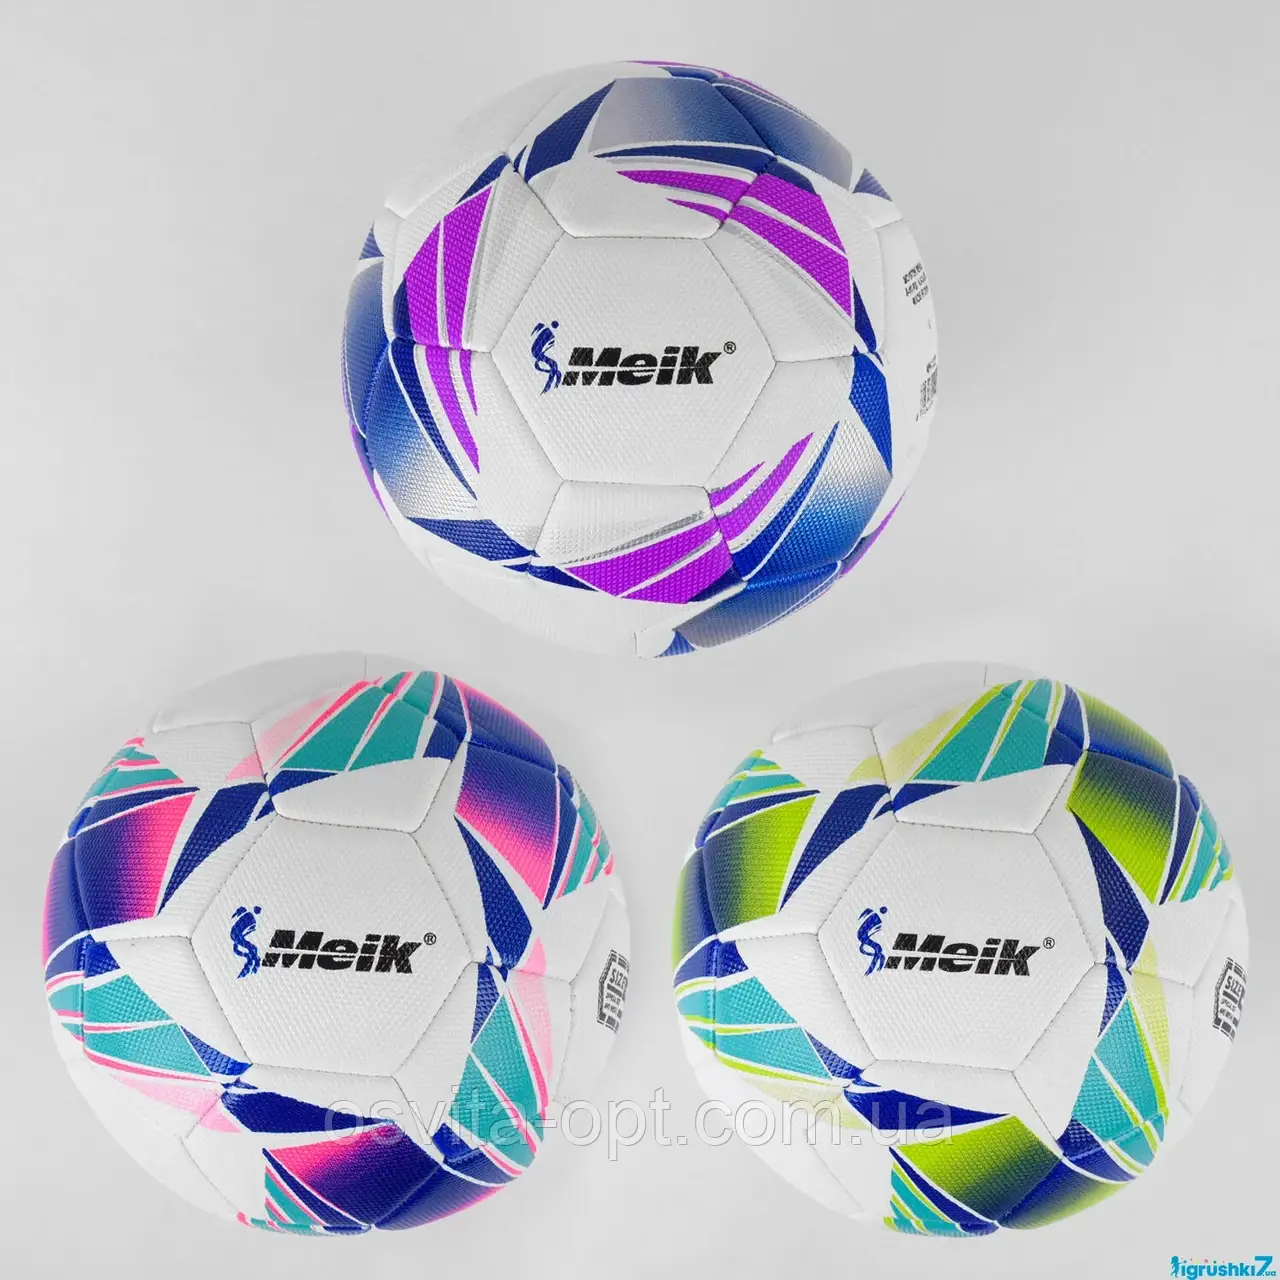 М'яч футбольнийC 44436 (50) 3 вида, вес 400 грамм, материал PU